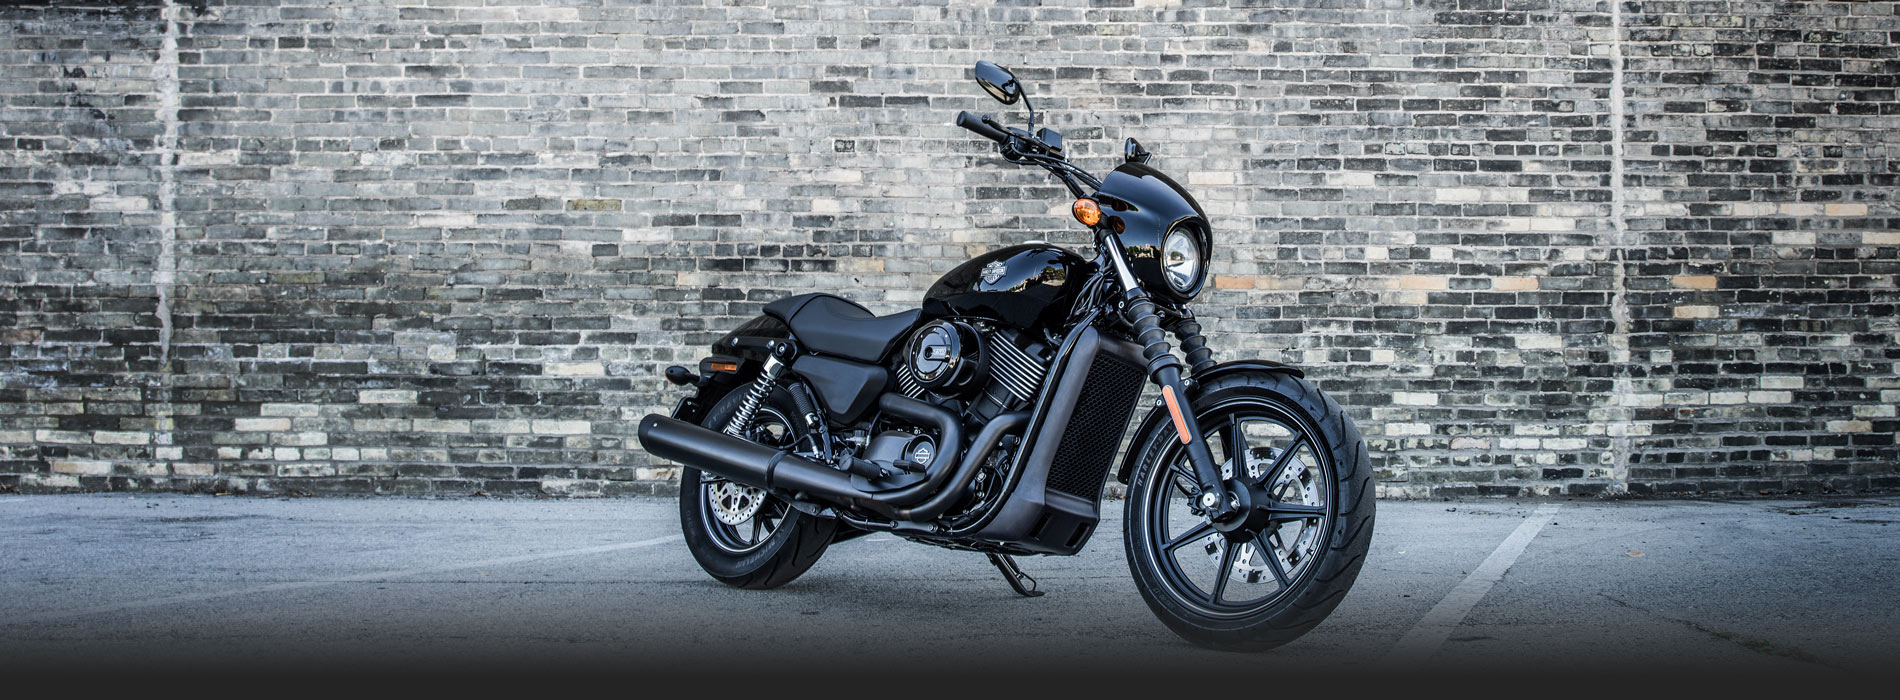 High Resolution Wallpaper | Harley-Davidson Street 1900x700 px